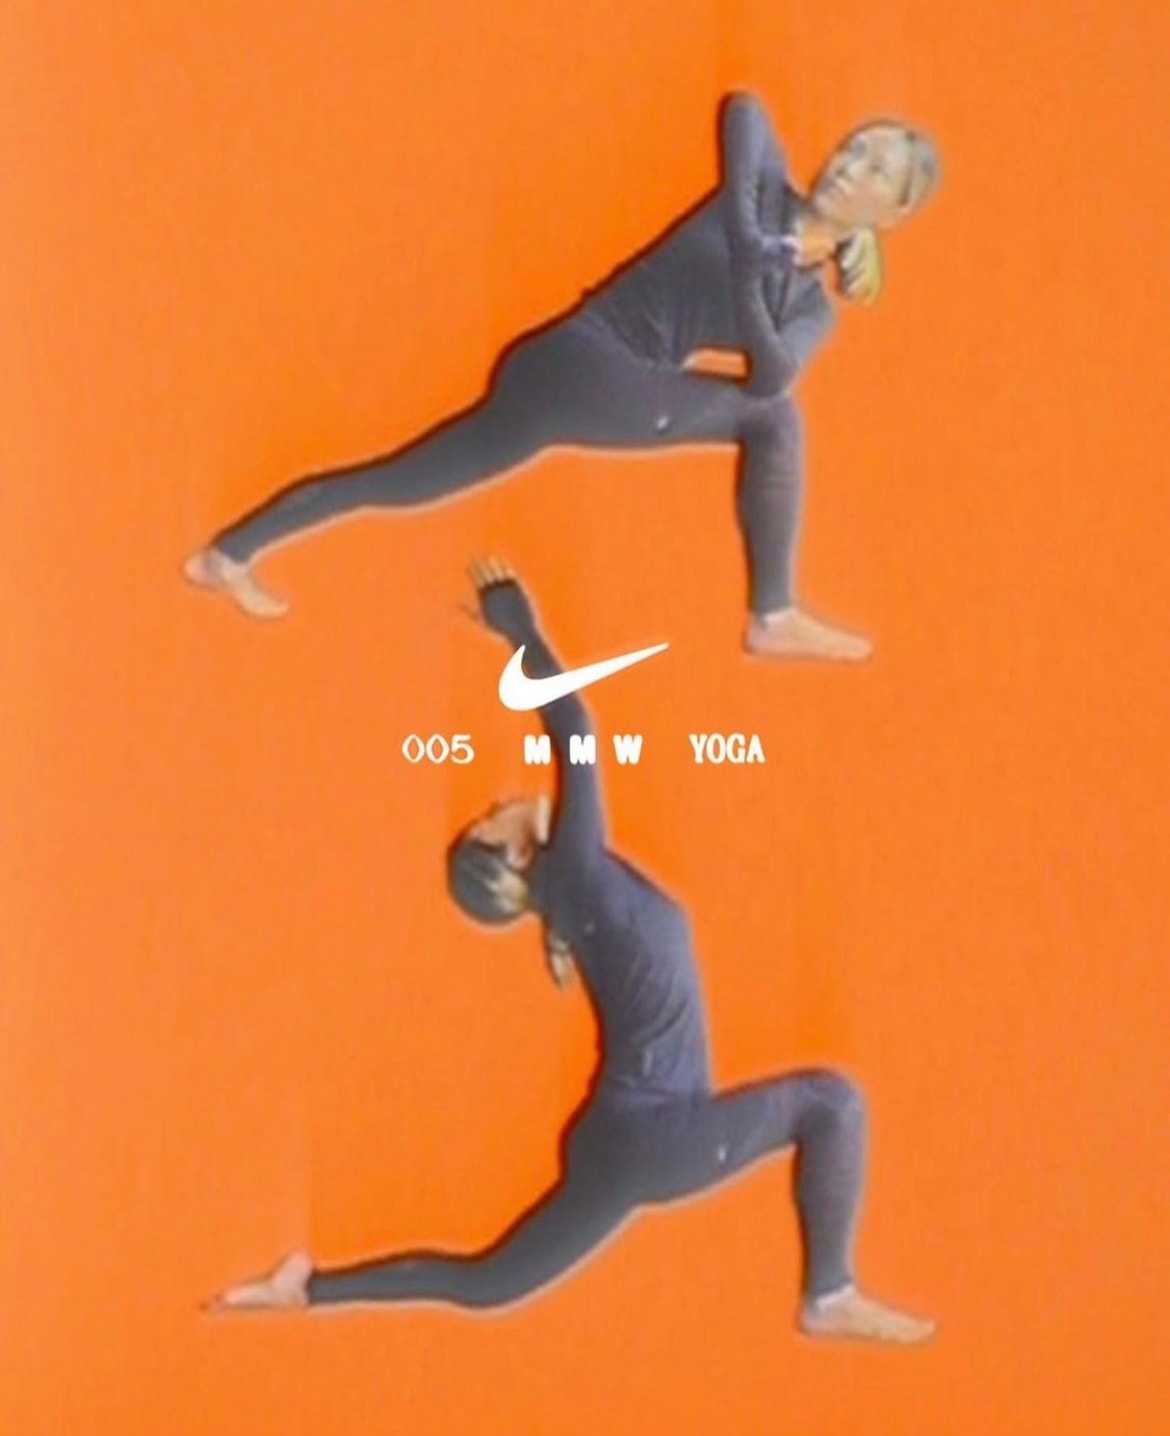 Nike X Matthew M. Williams 最新聯名瑜伽系列「005 MMW YOGA」正式登場